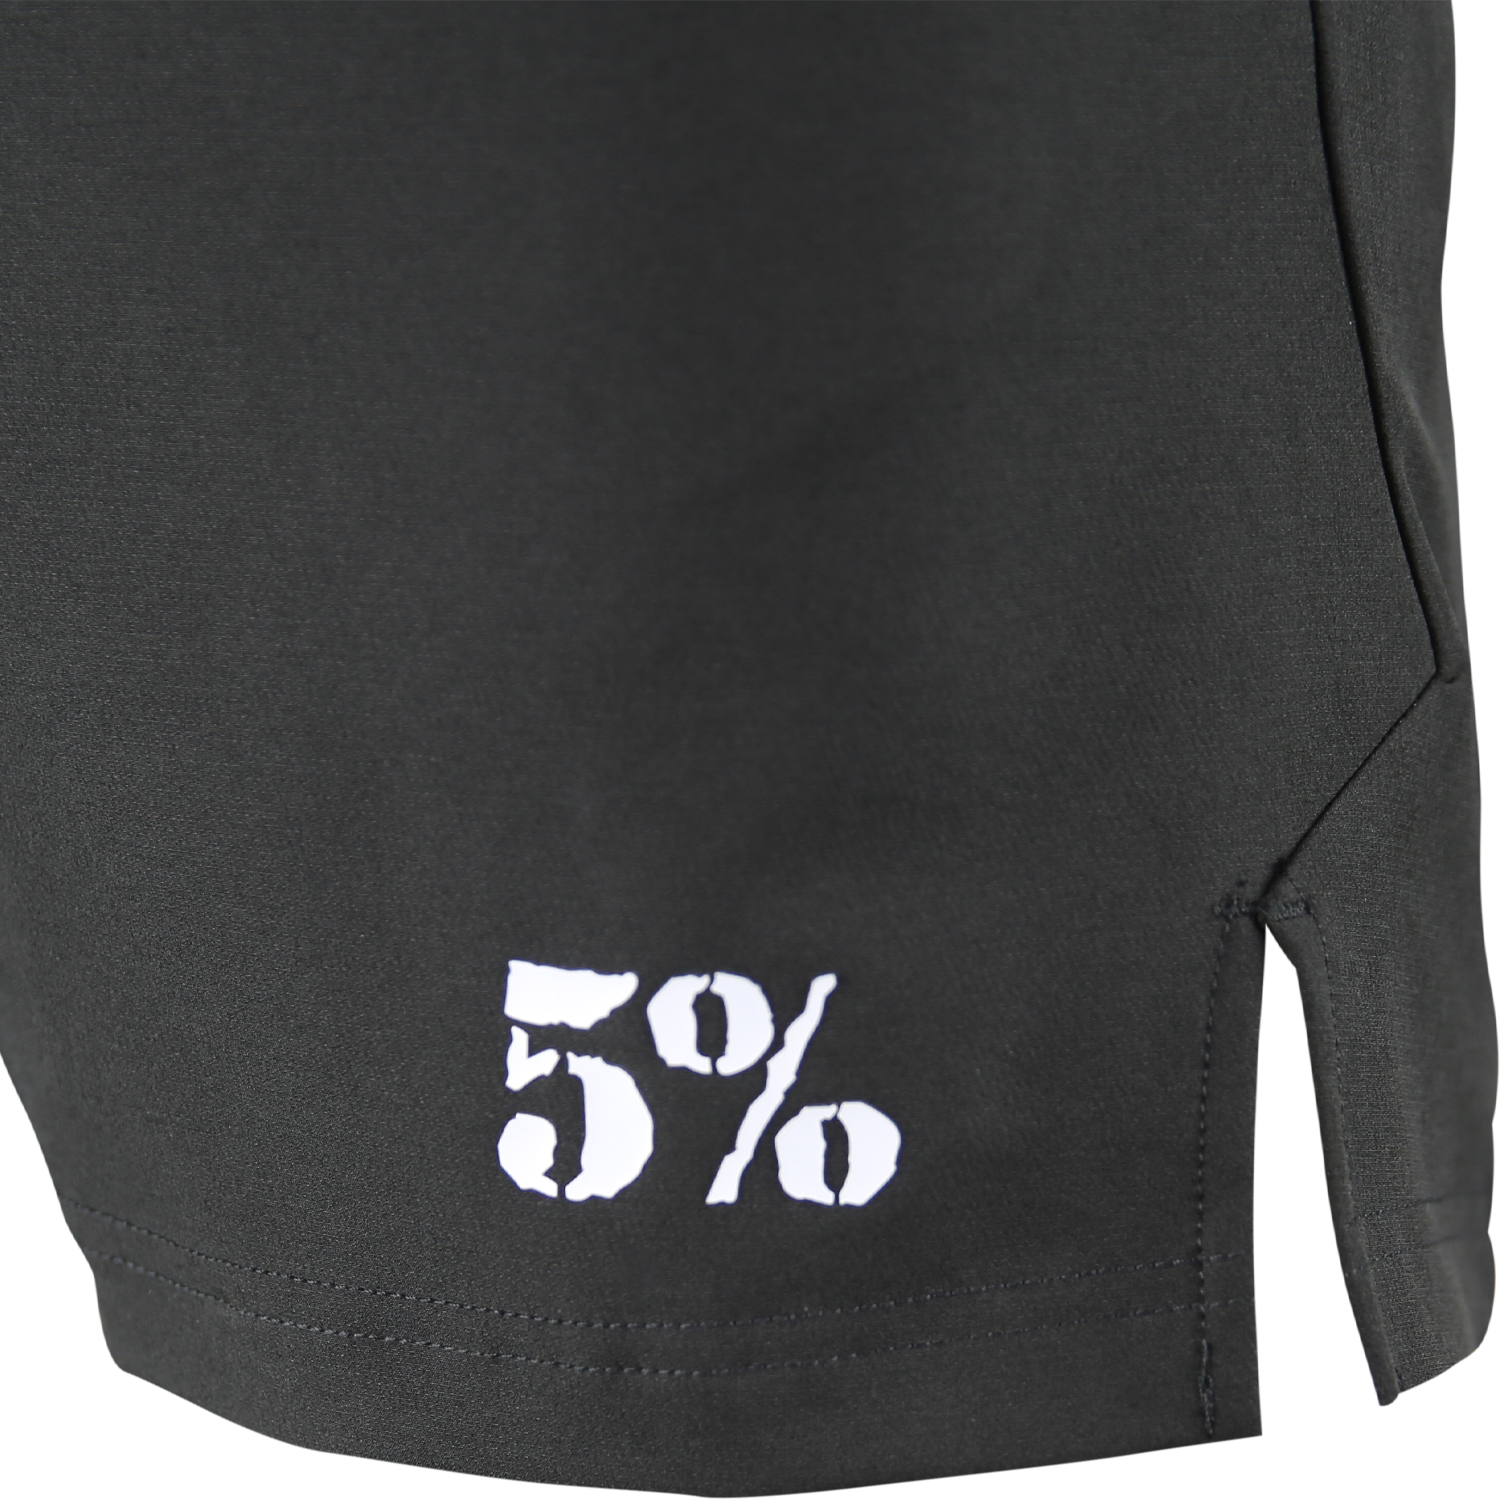 5% Black Lifting Shorts - 5% Nutrition